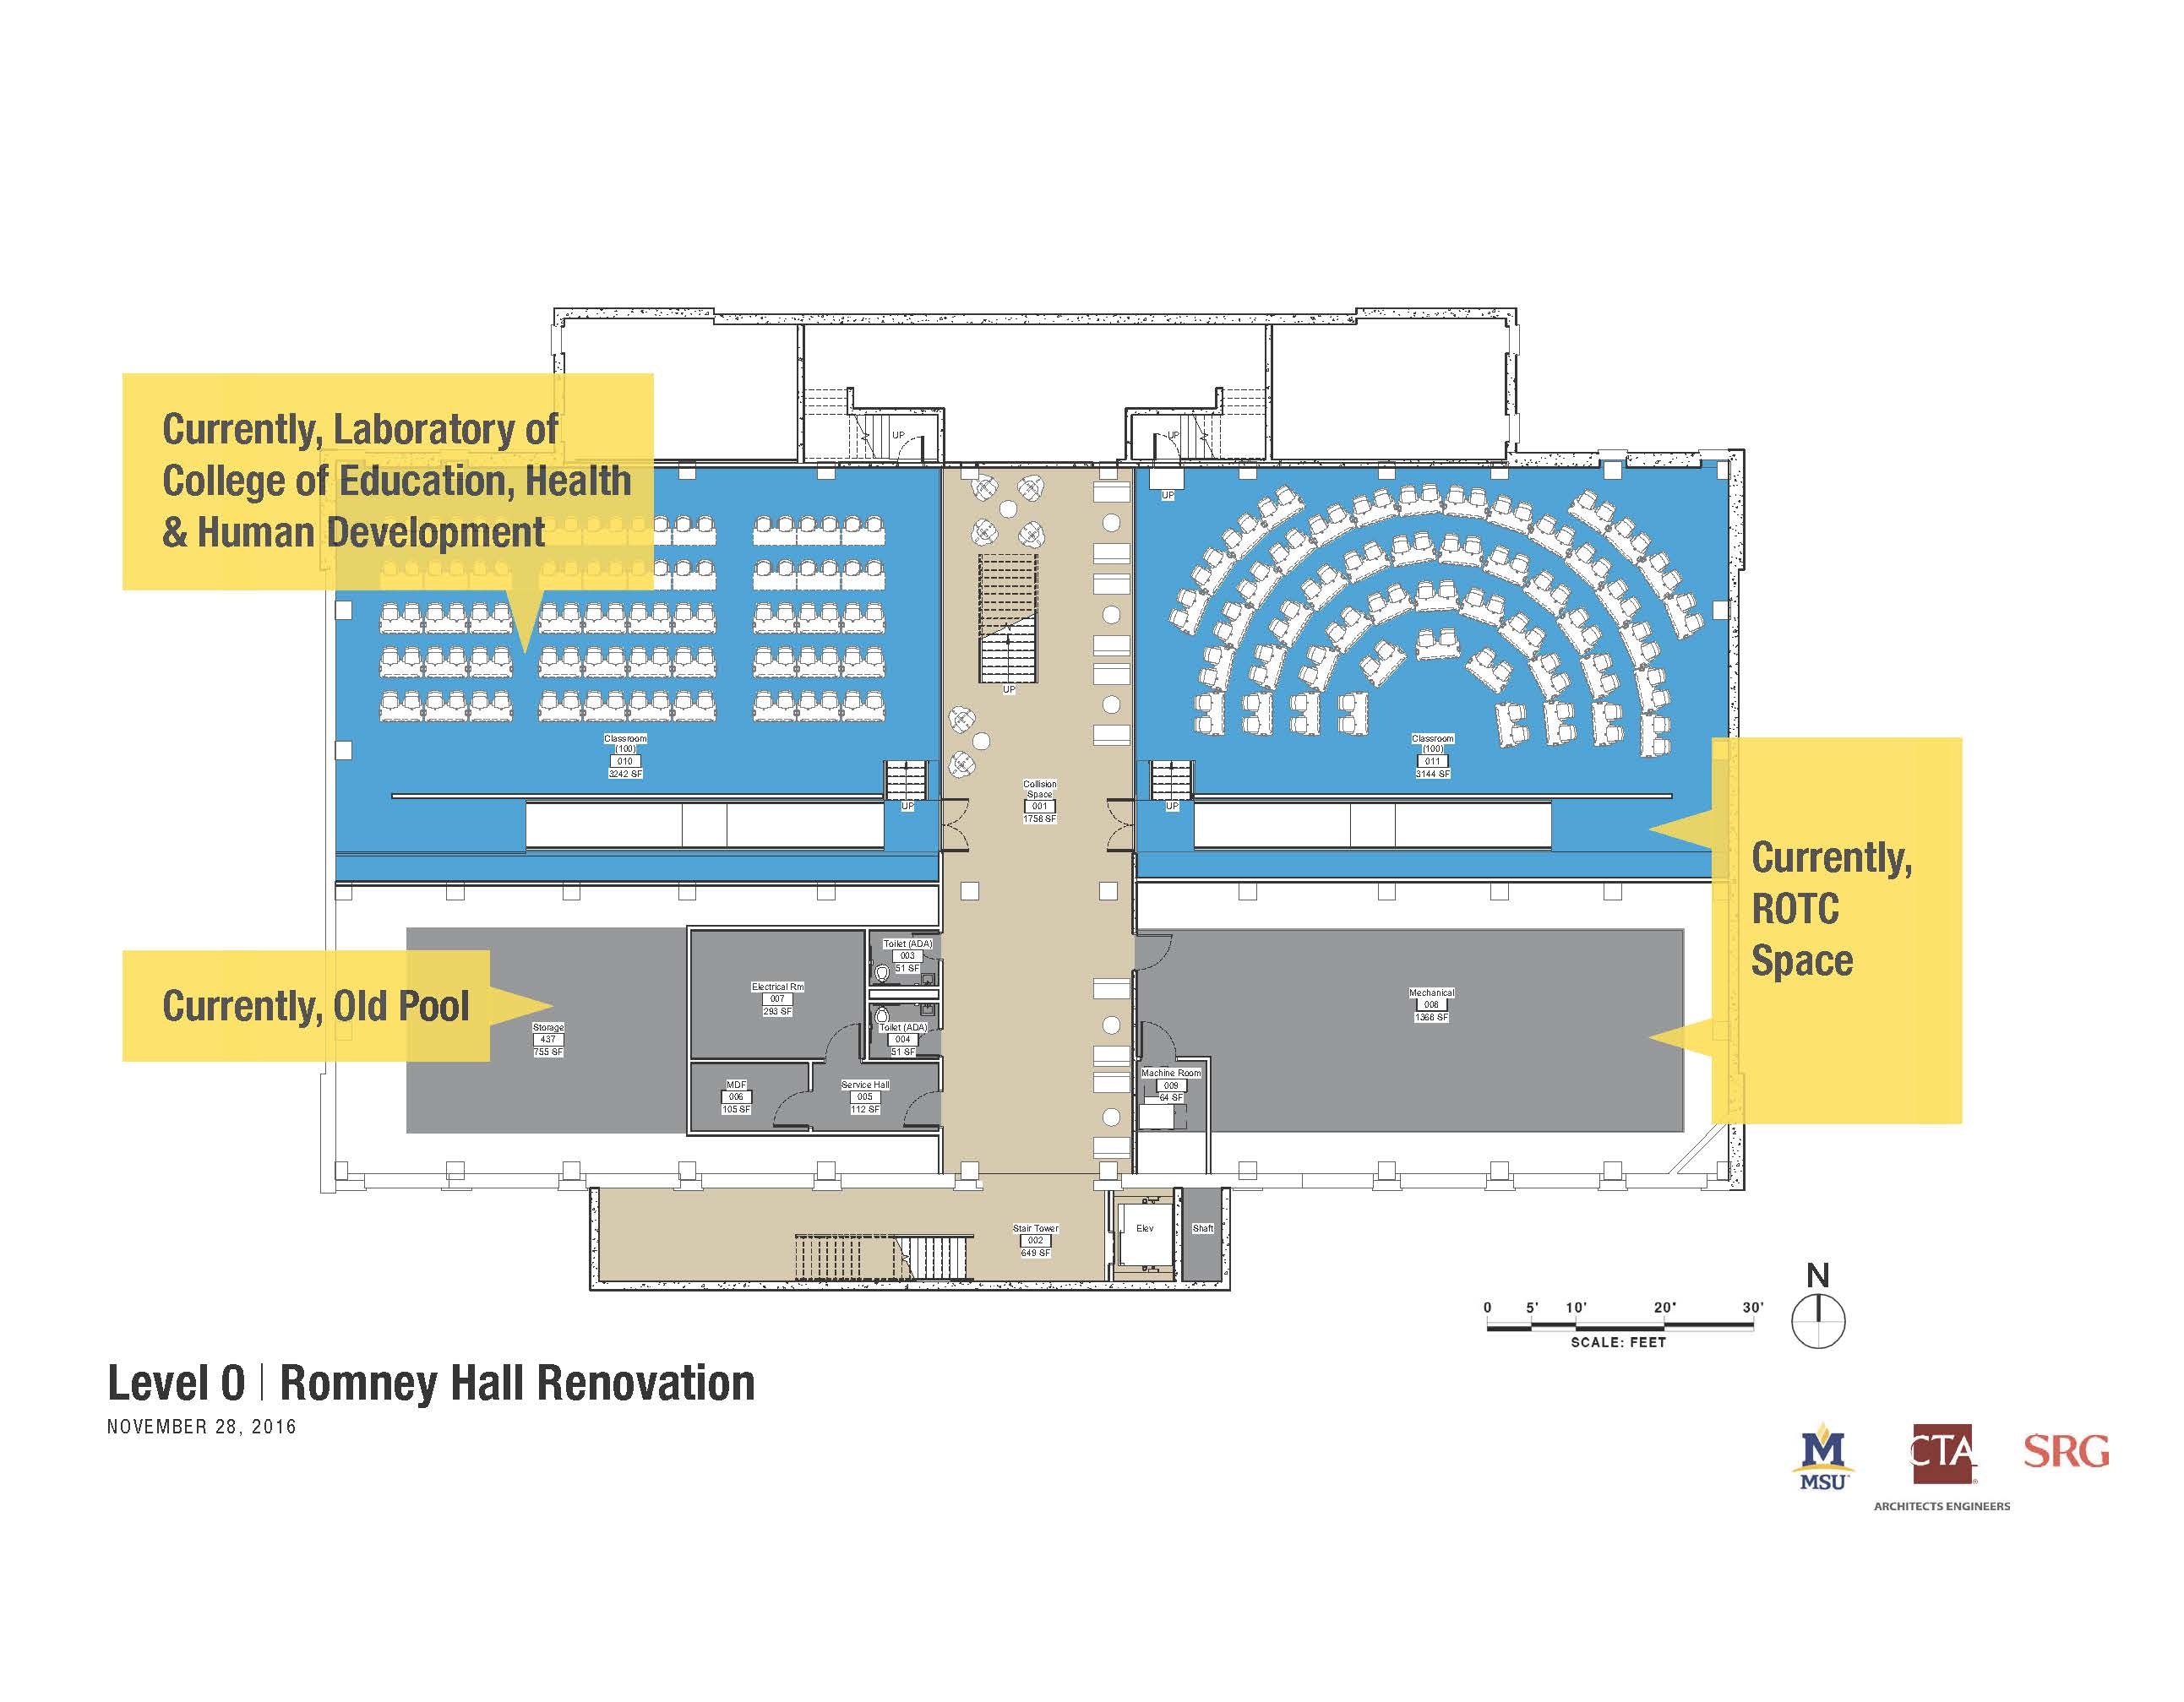 Romney Hall repurposing floorplan showing Level 0 of the building.